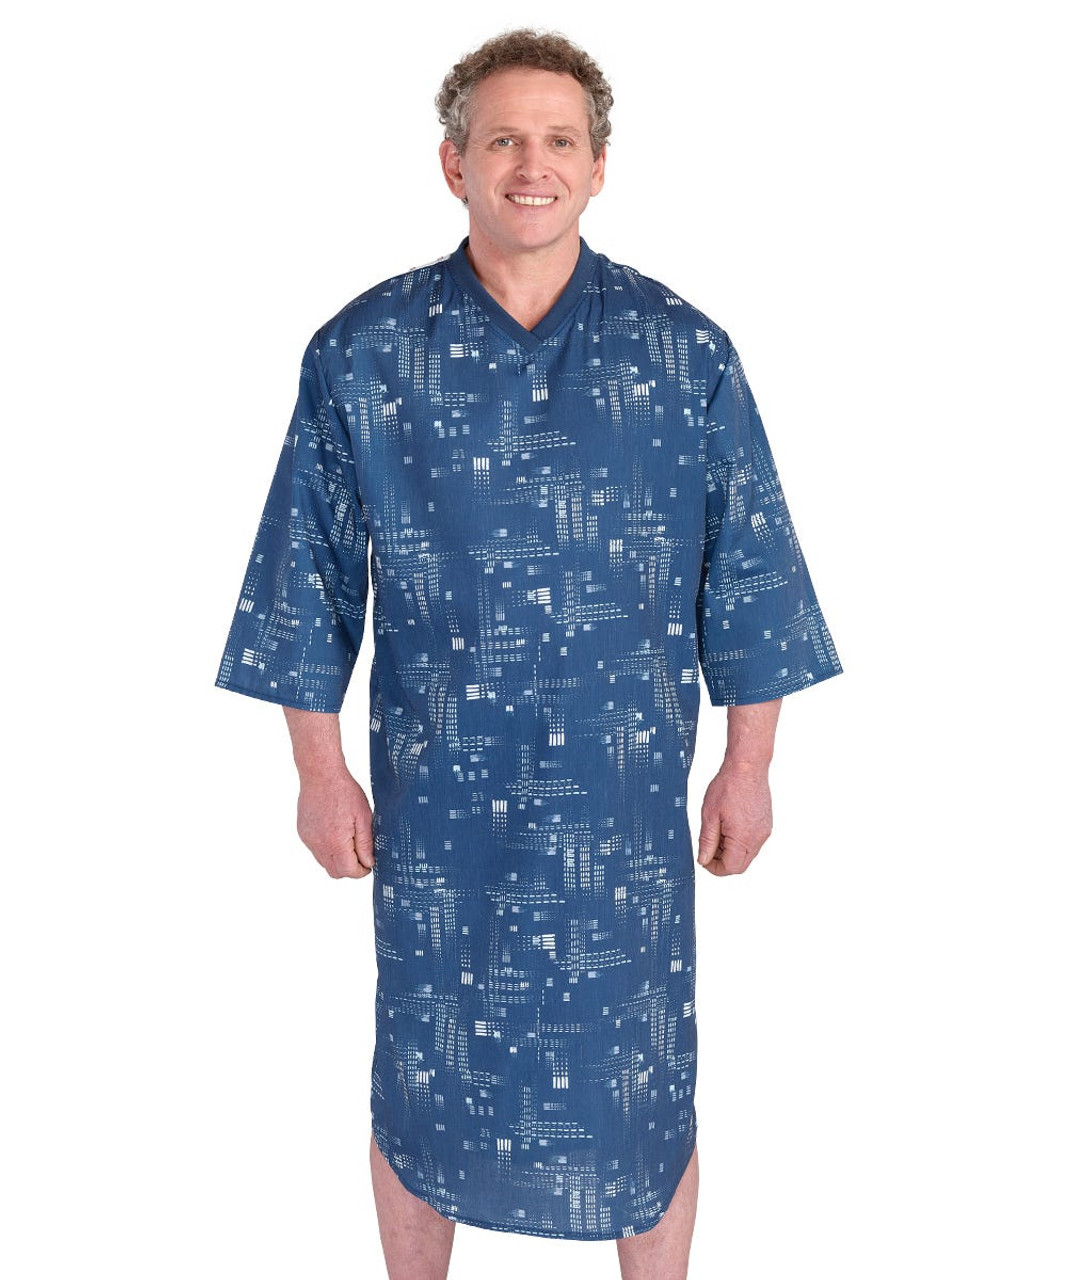 Silverts SV50050 Poly-Cotton Hospital Gowns for Men Navy/Gray, Size=3XL, SV50050-SV1372-3XL